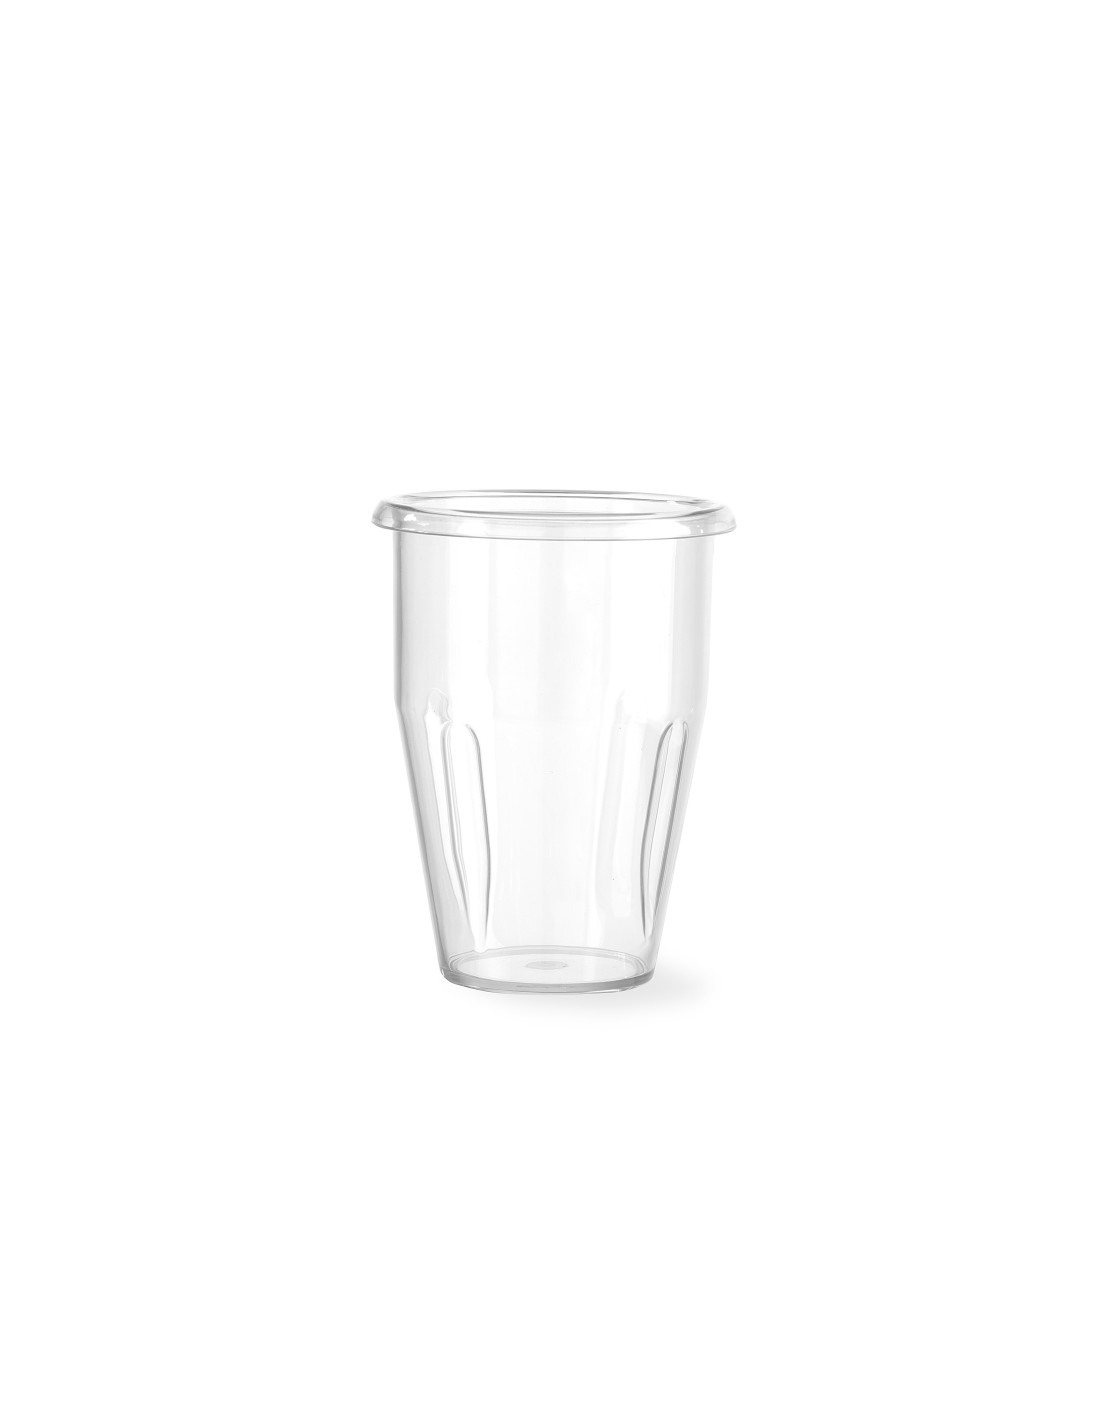 Polycarbonate cup - For Milkshake blenders - Design by bronwasser